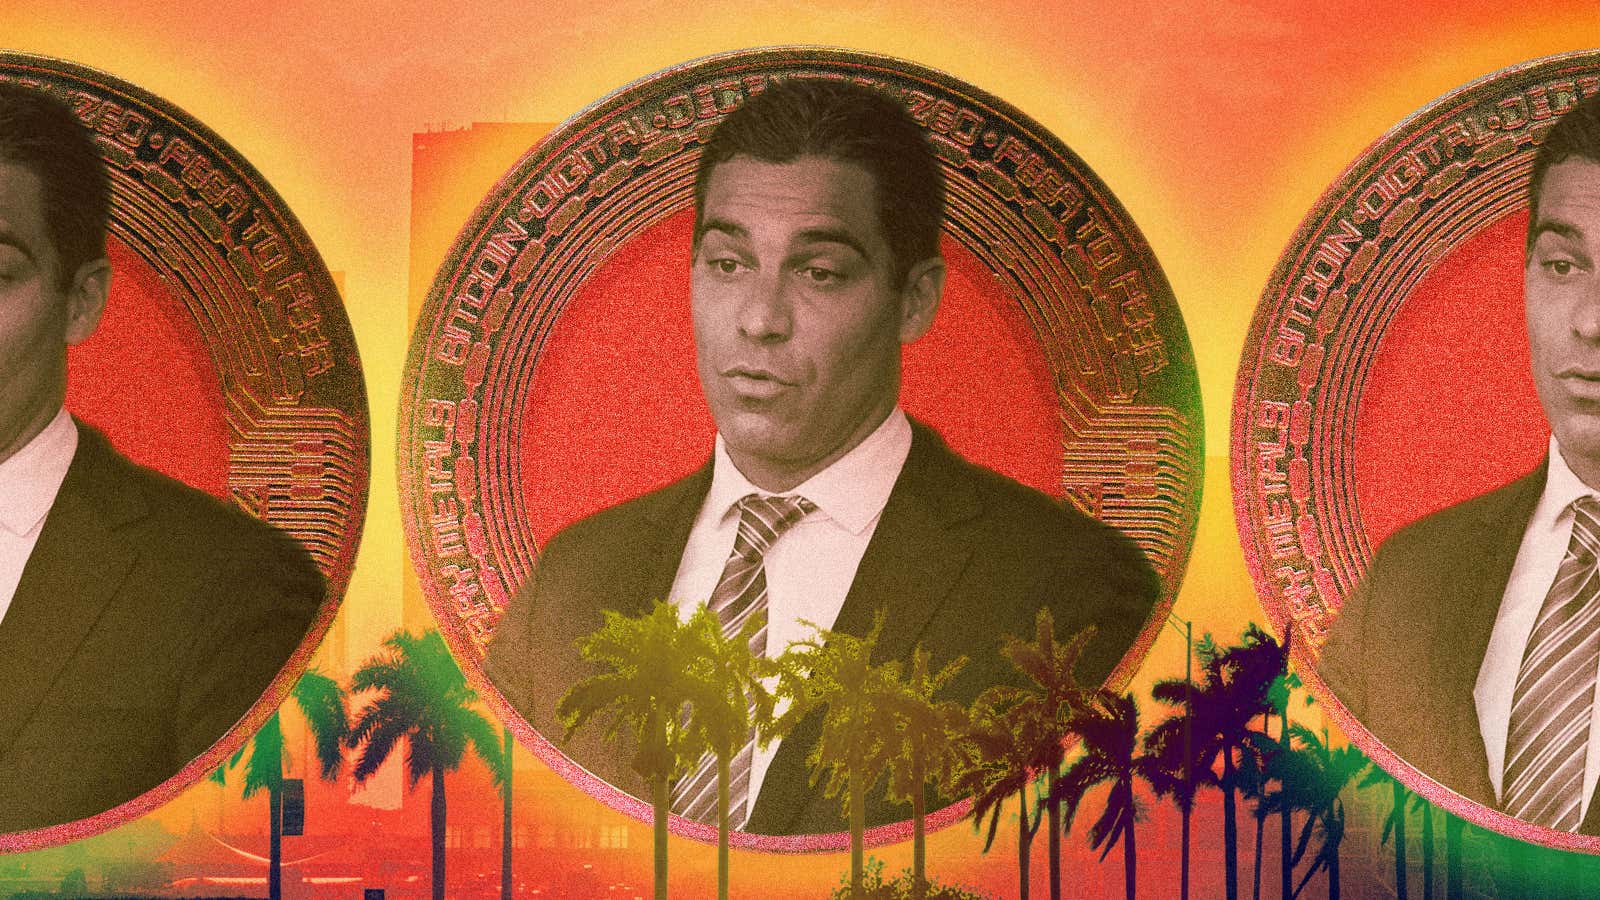 Mayor Francis Suarez has bet his political career on crypto.